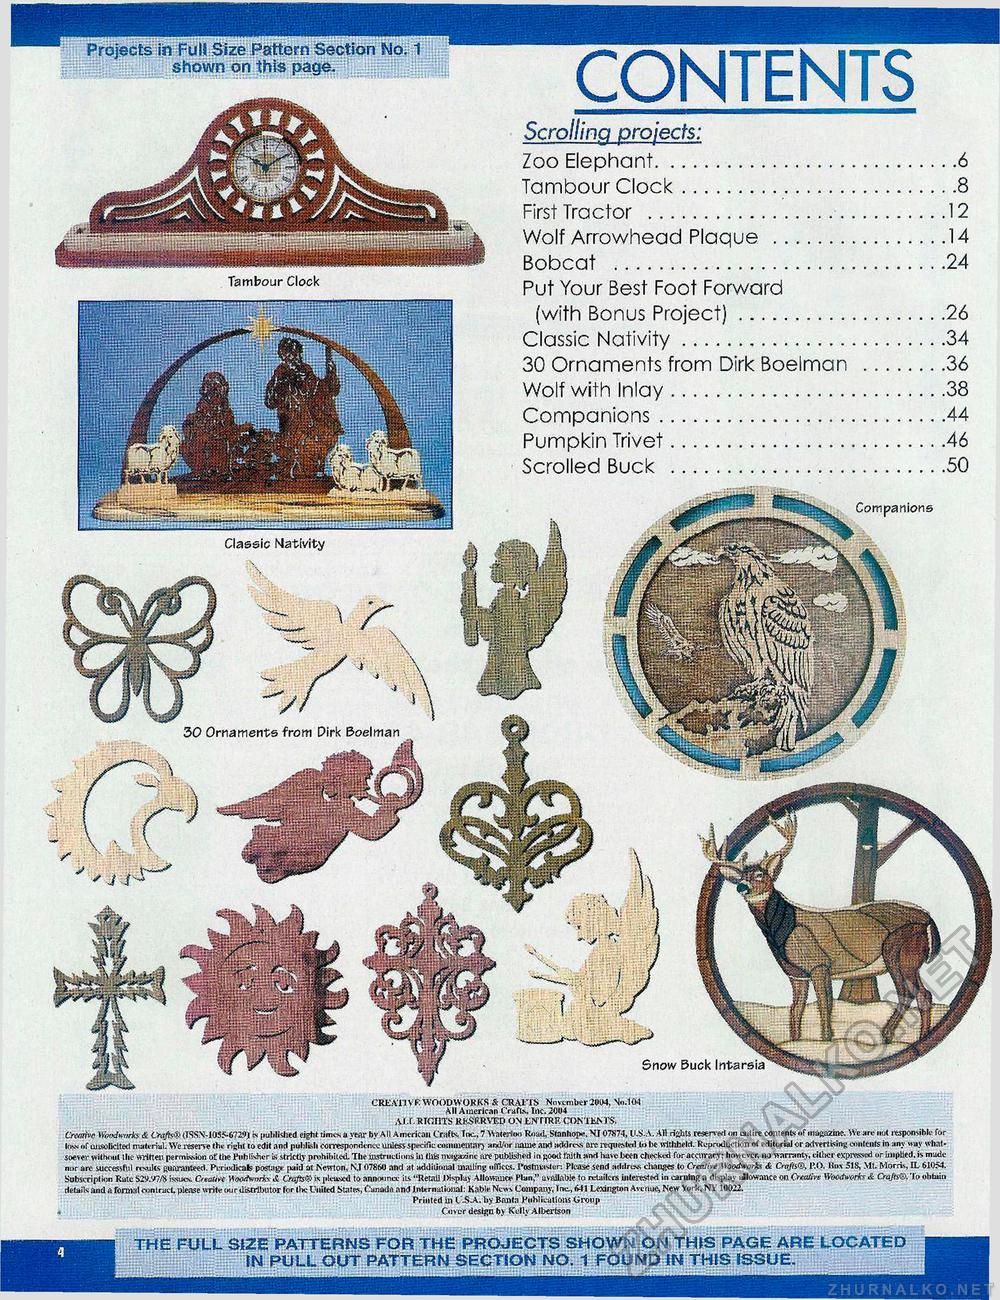 Creative Woodworks & crafts 2004-11,  4